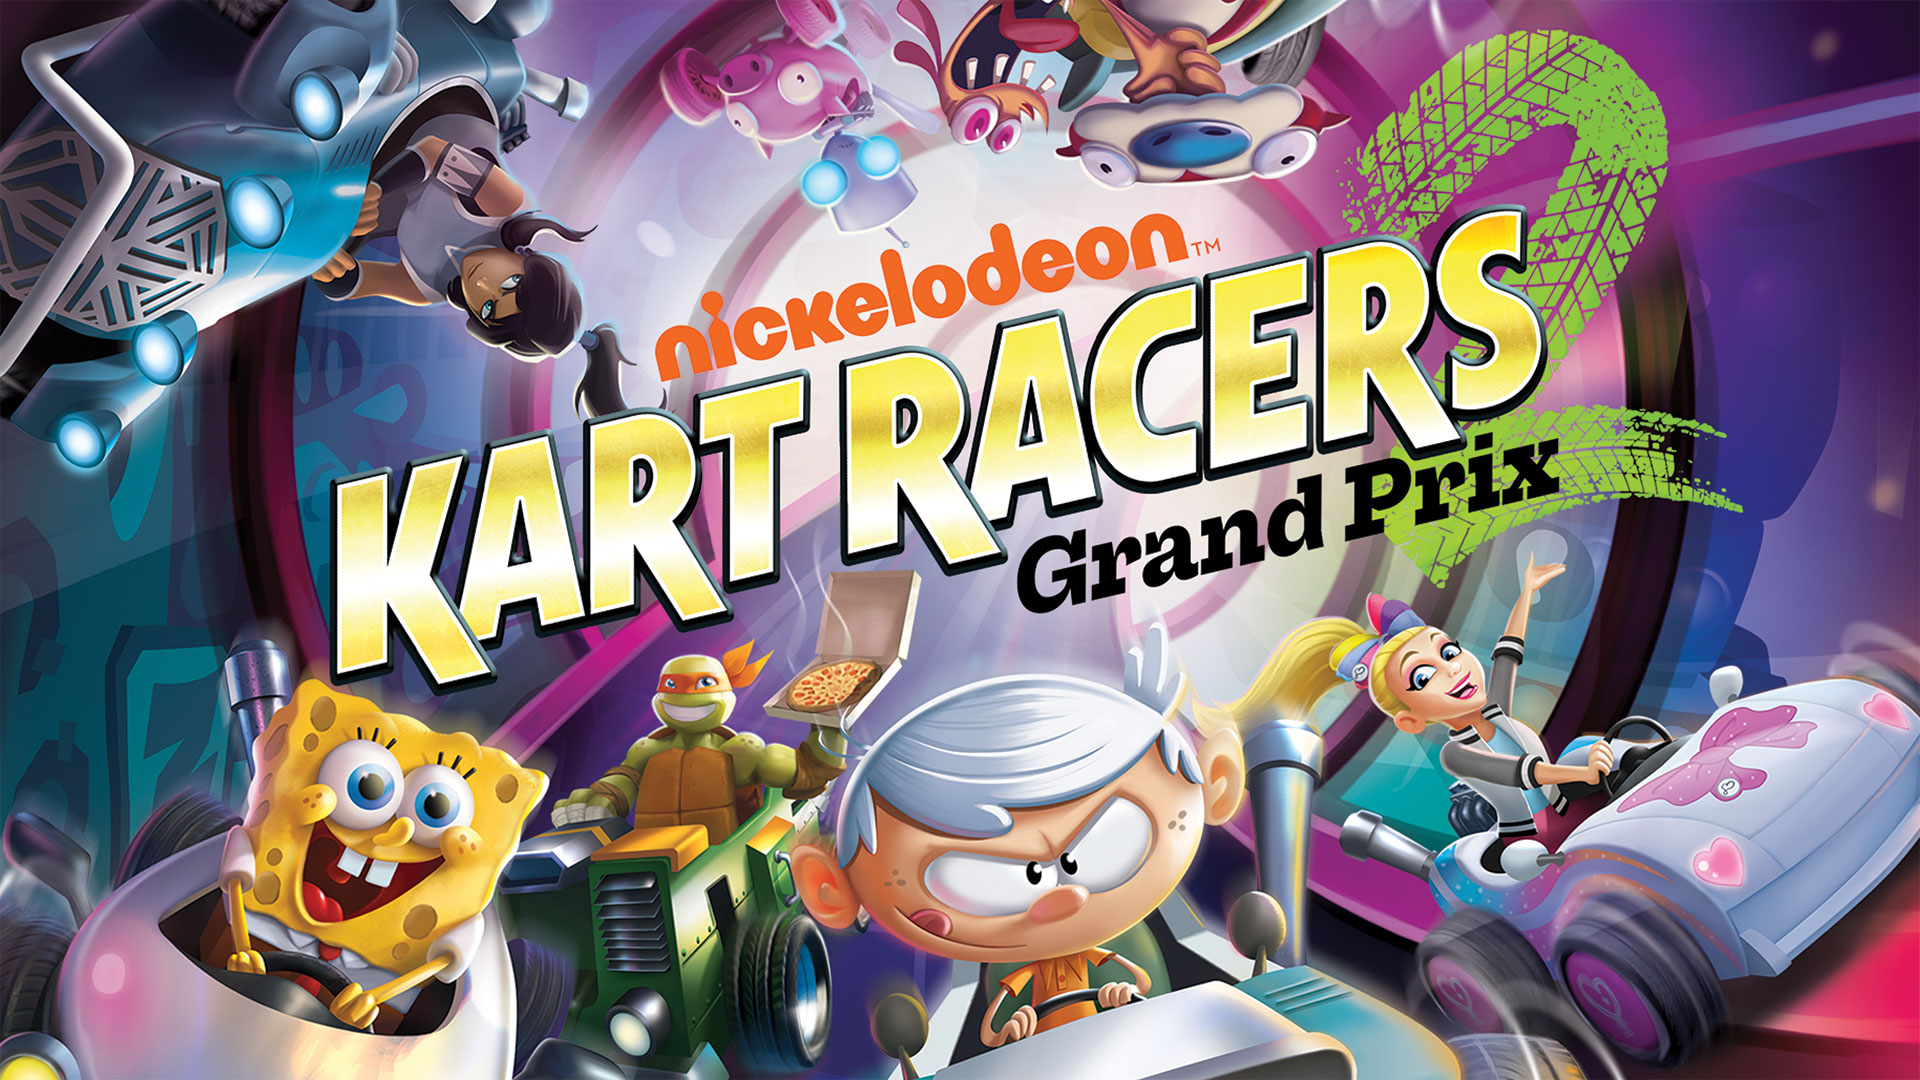 download kart racers 2 for free